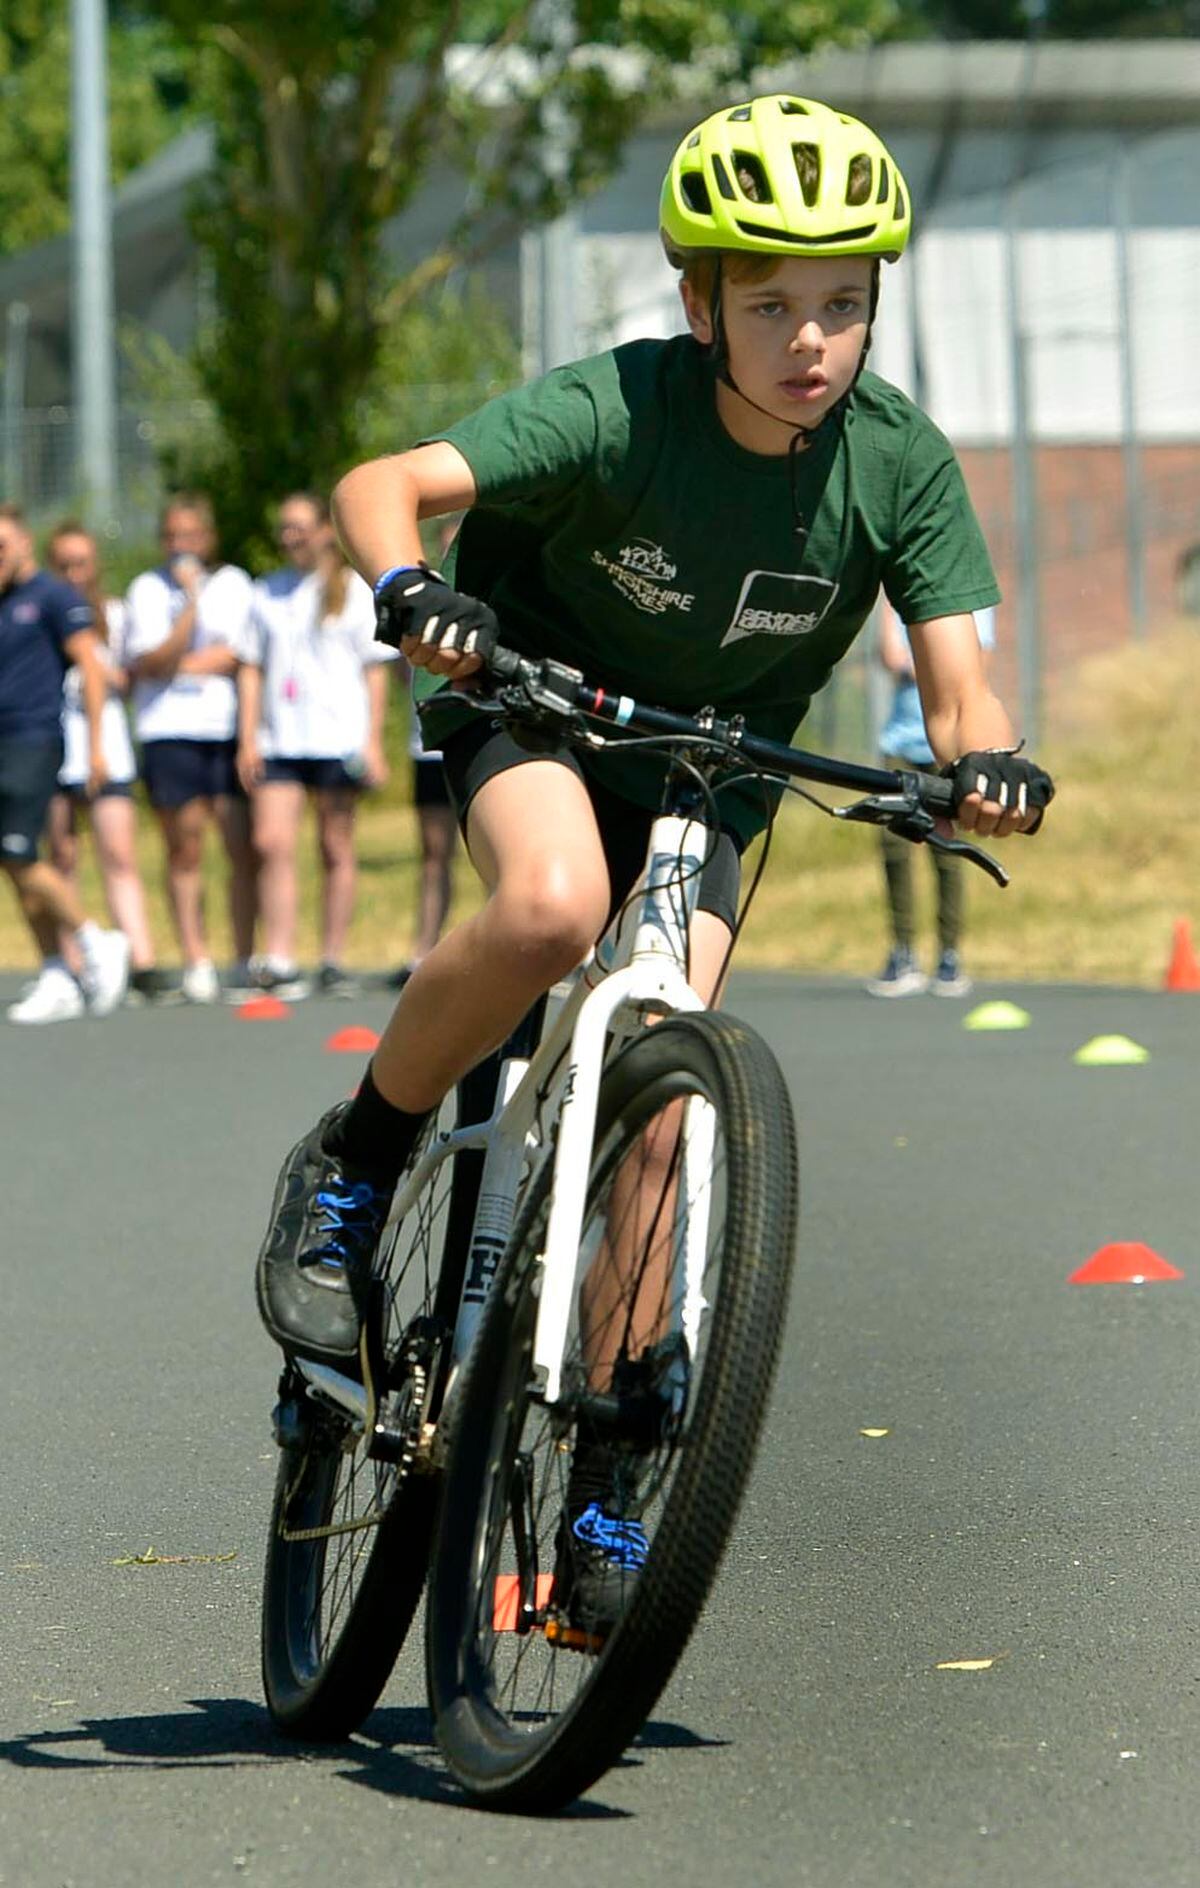 Shropshire Homes School Sport Festival